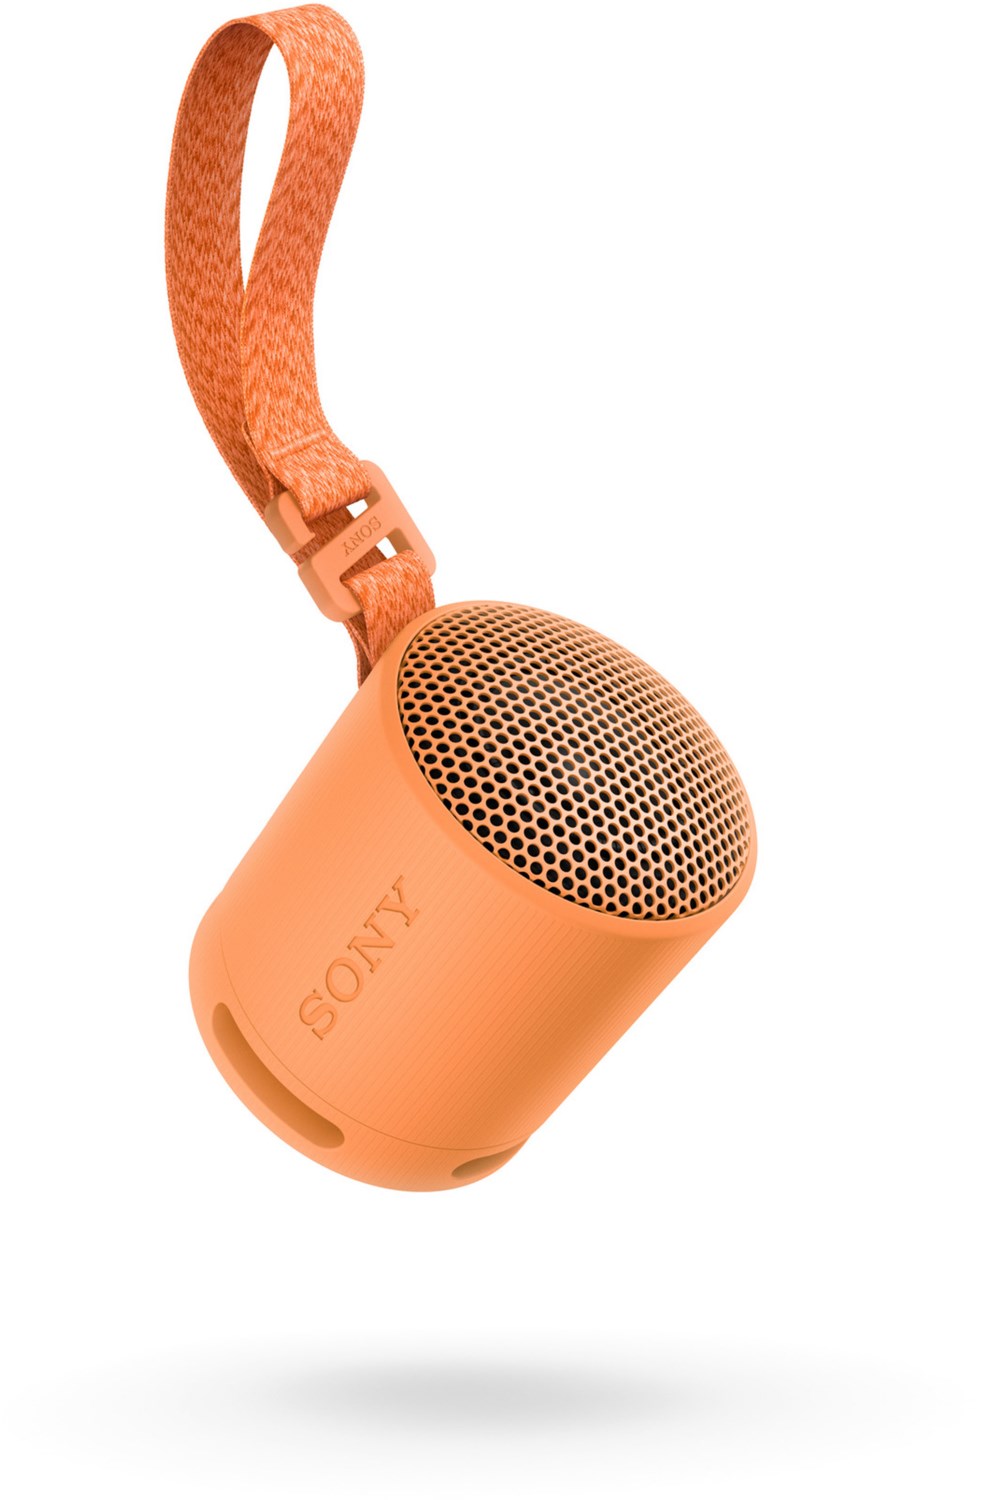 SRS-XB100D Bluetooth-Lautsprecher orange